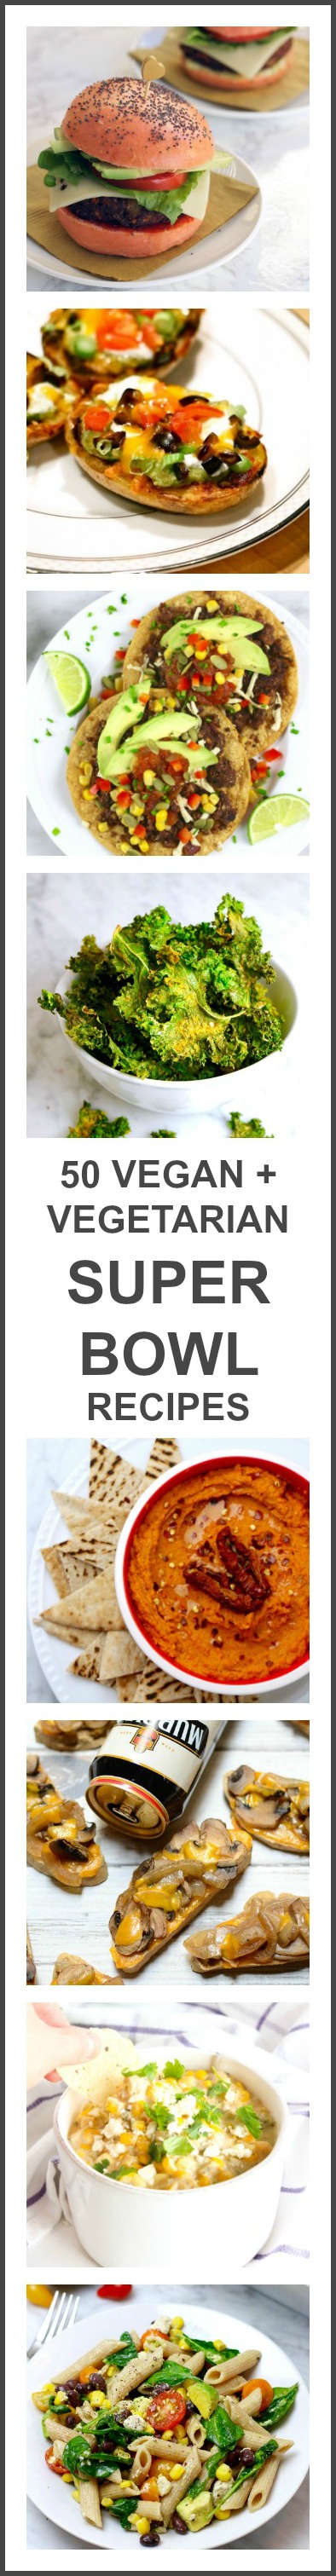 https://www.whitneyerd.com/wp-content/uploads/2017/01/50-Vegan-Vegetarian-Super-Bowl-Recipes.jpg